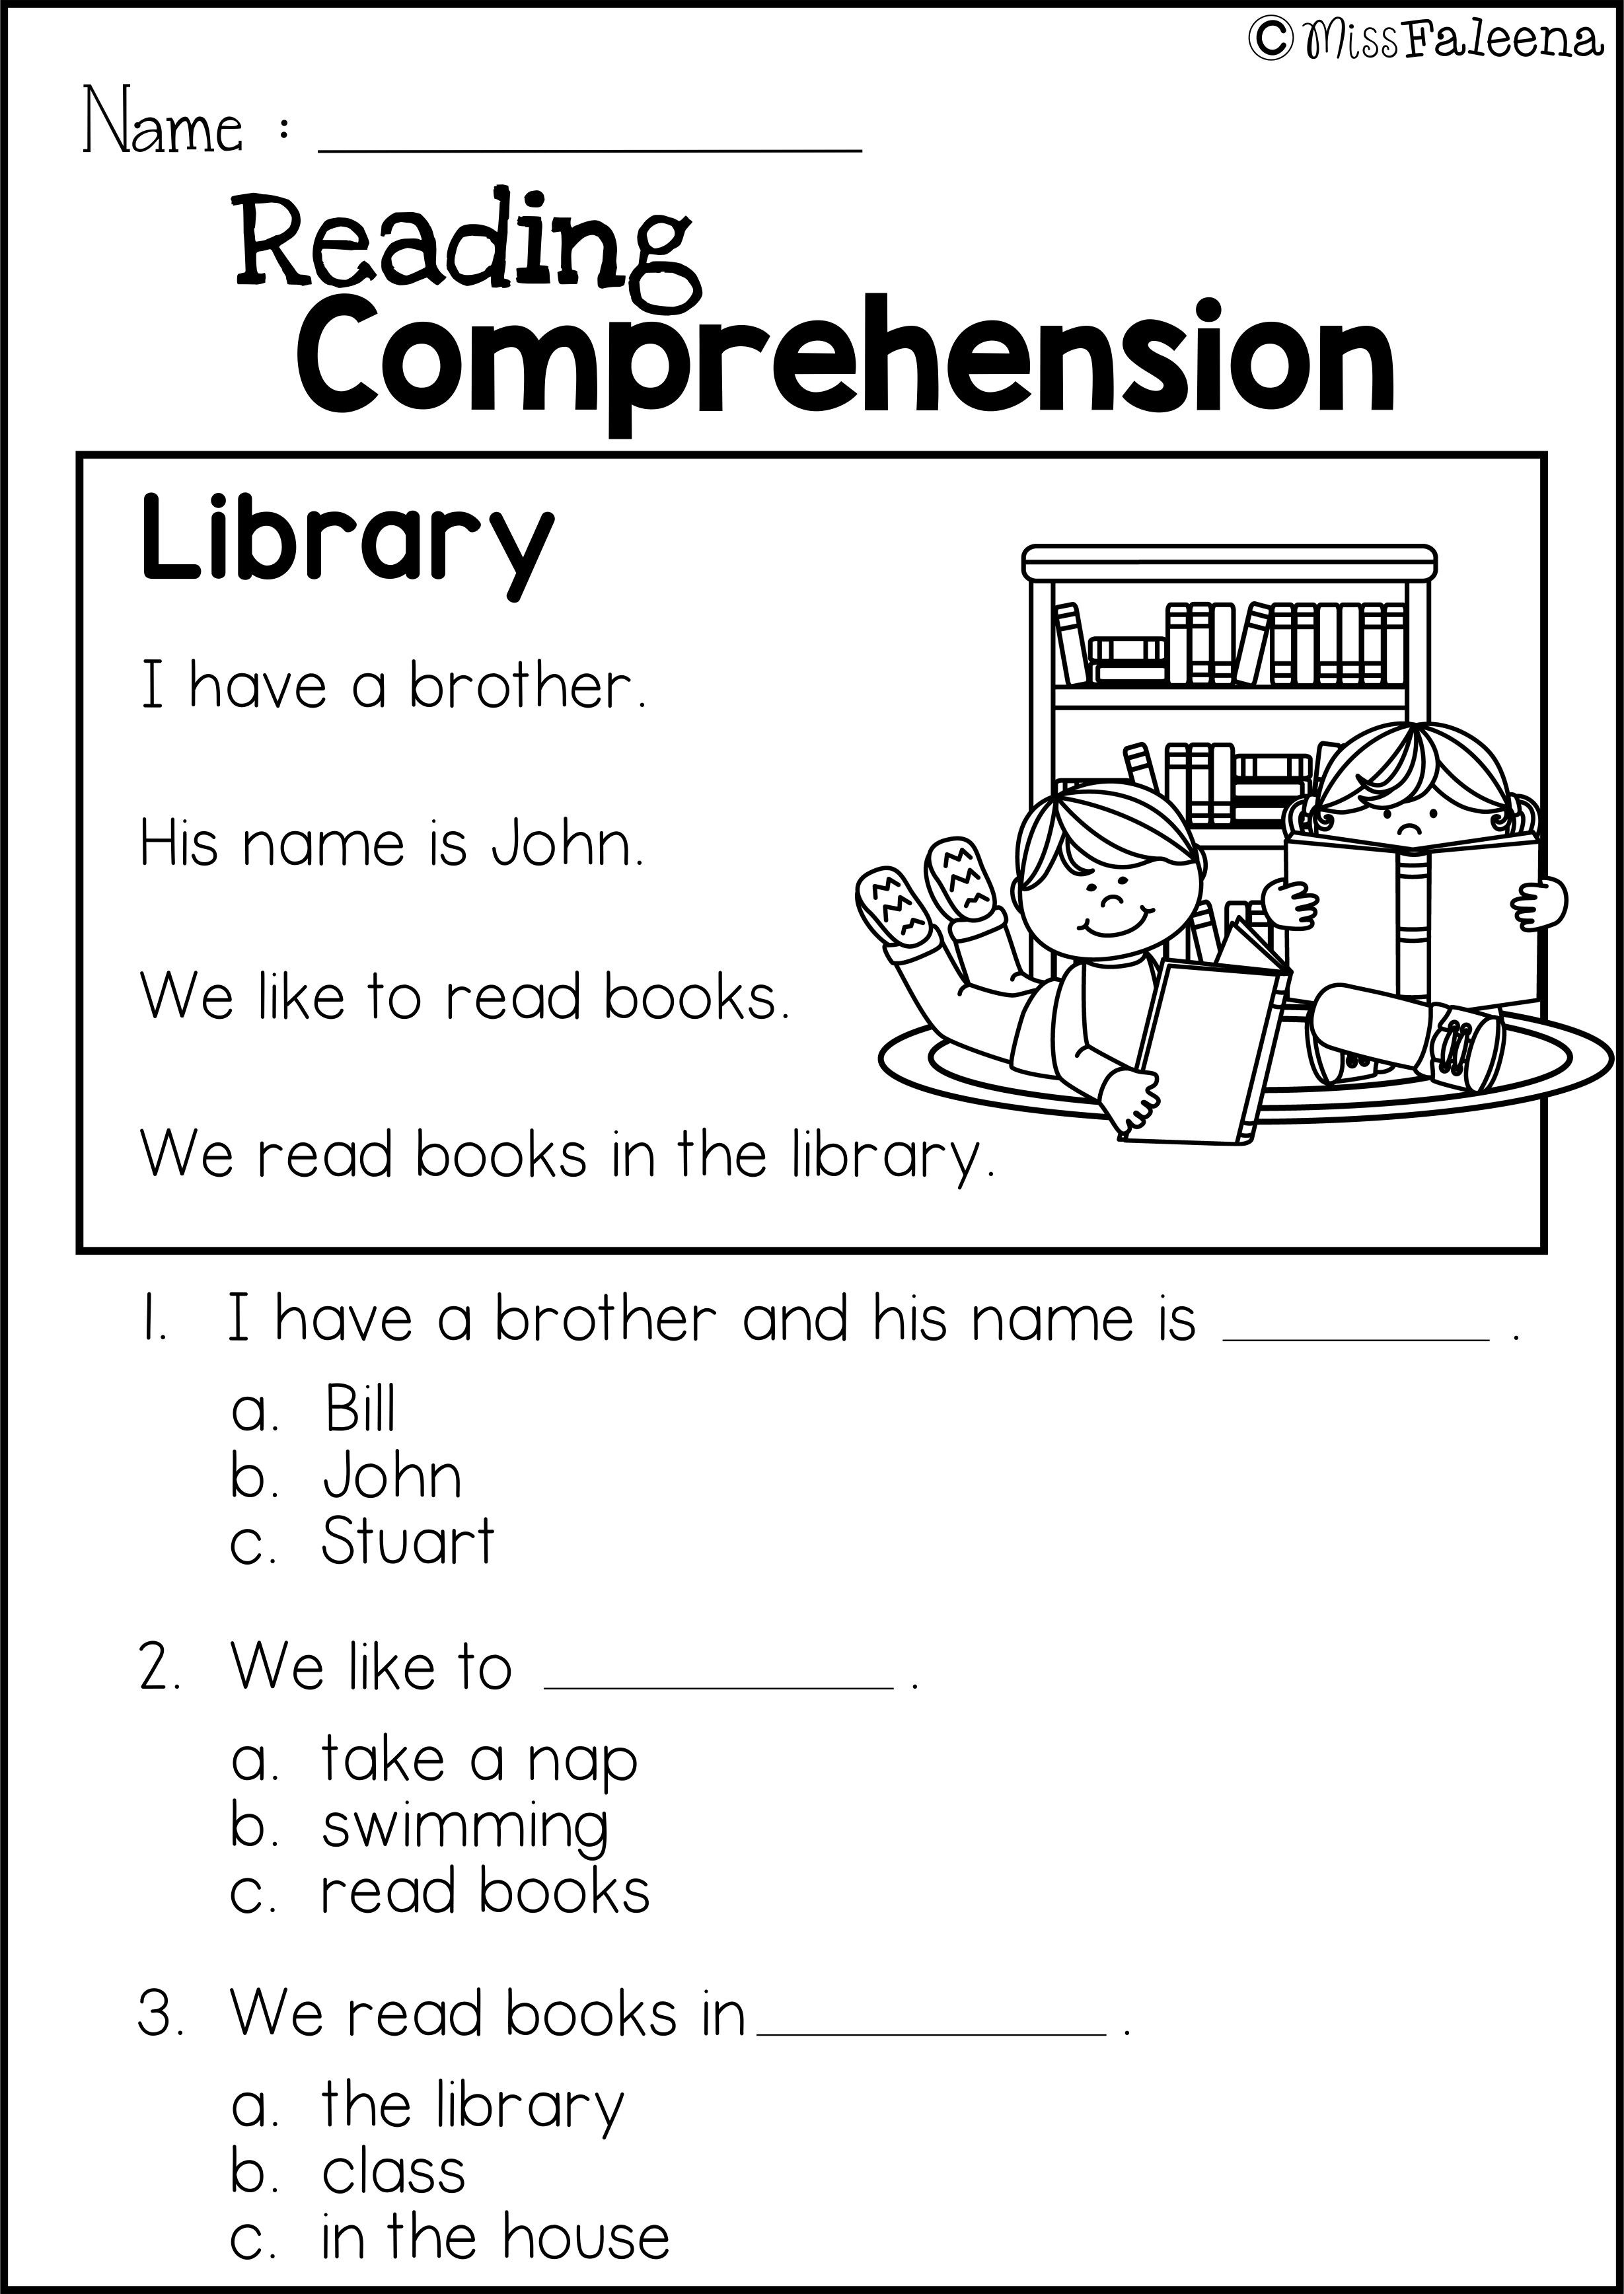 Free First Grade Reading Comprehension Worksheets With Questions | 1St Grade Reading Comprehension Worksheets Printable